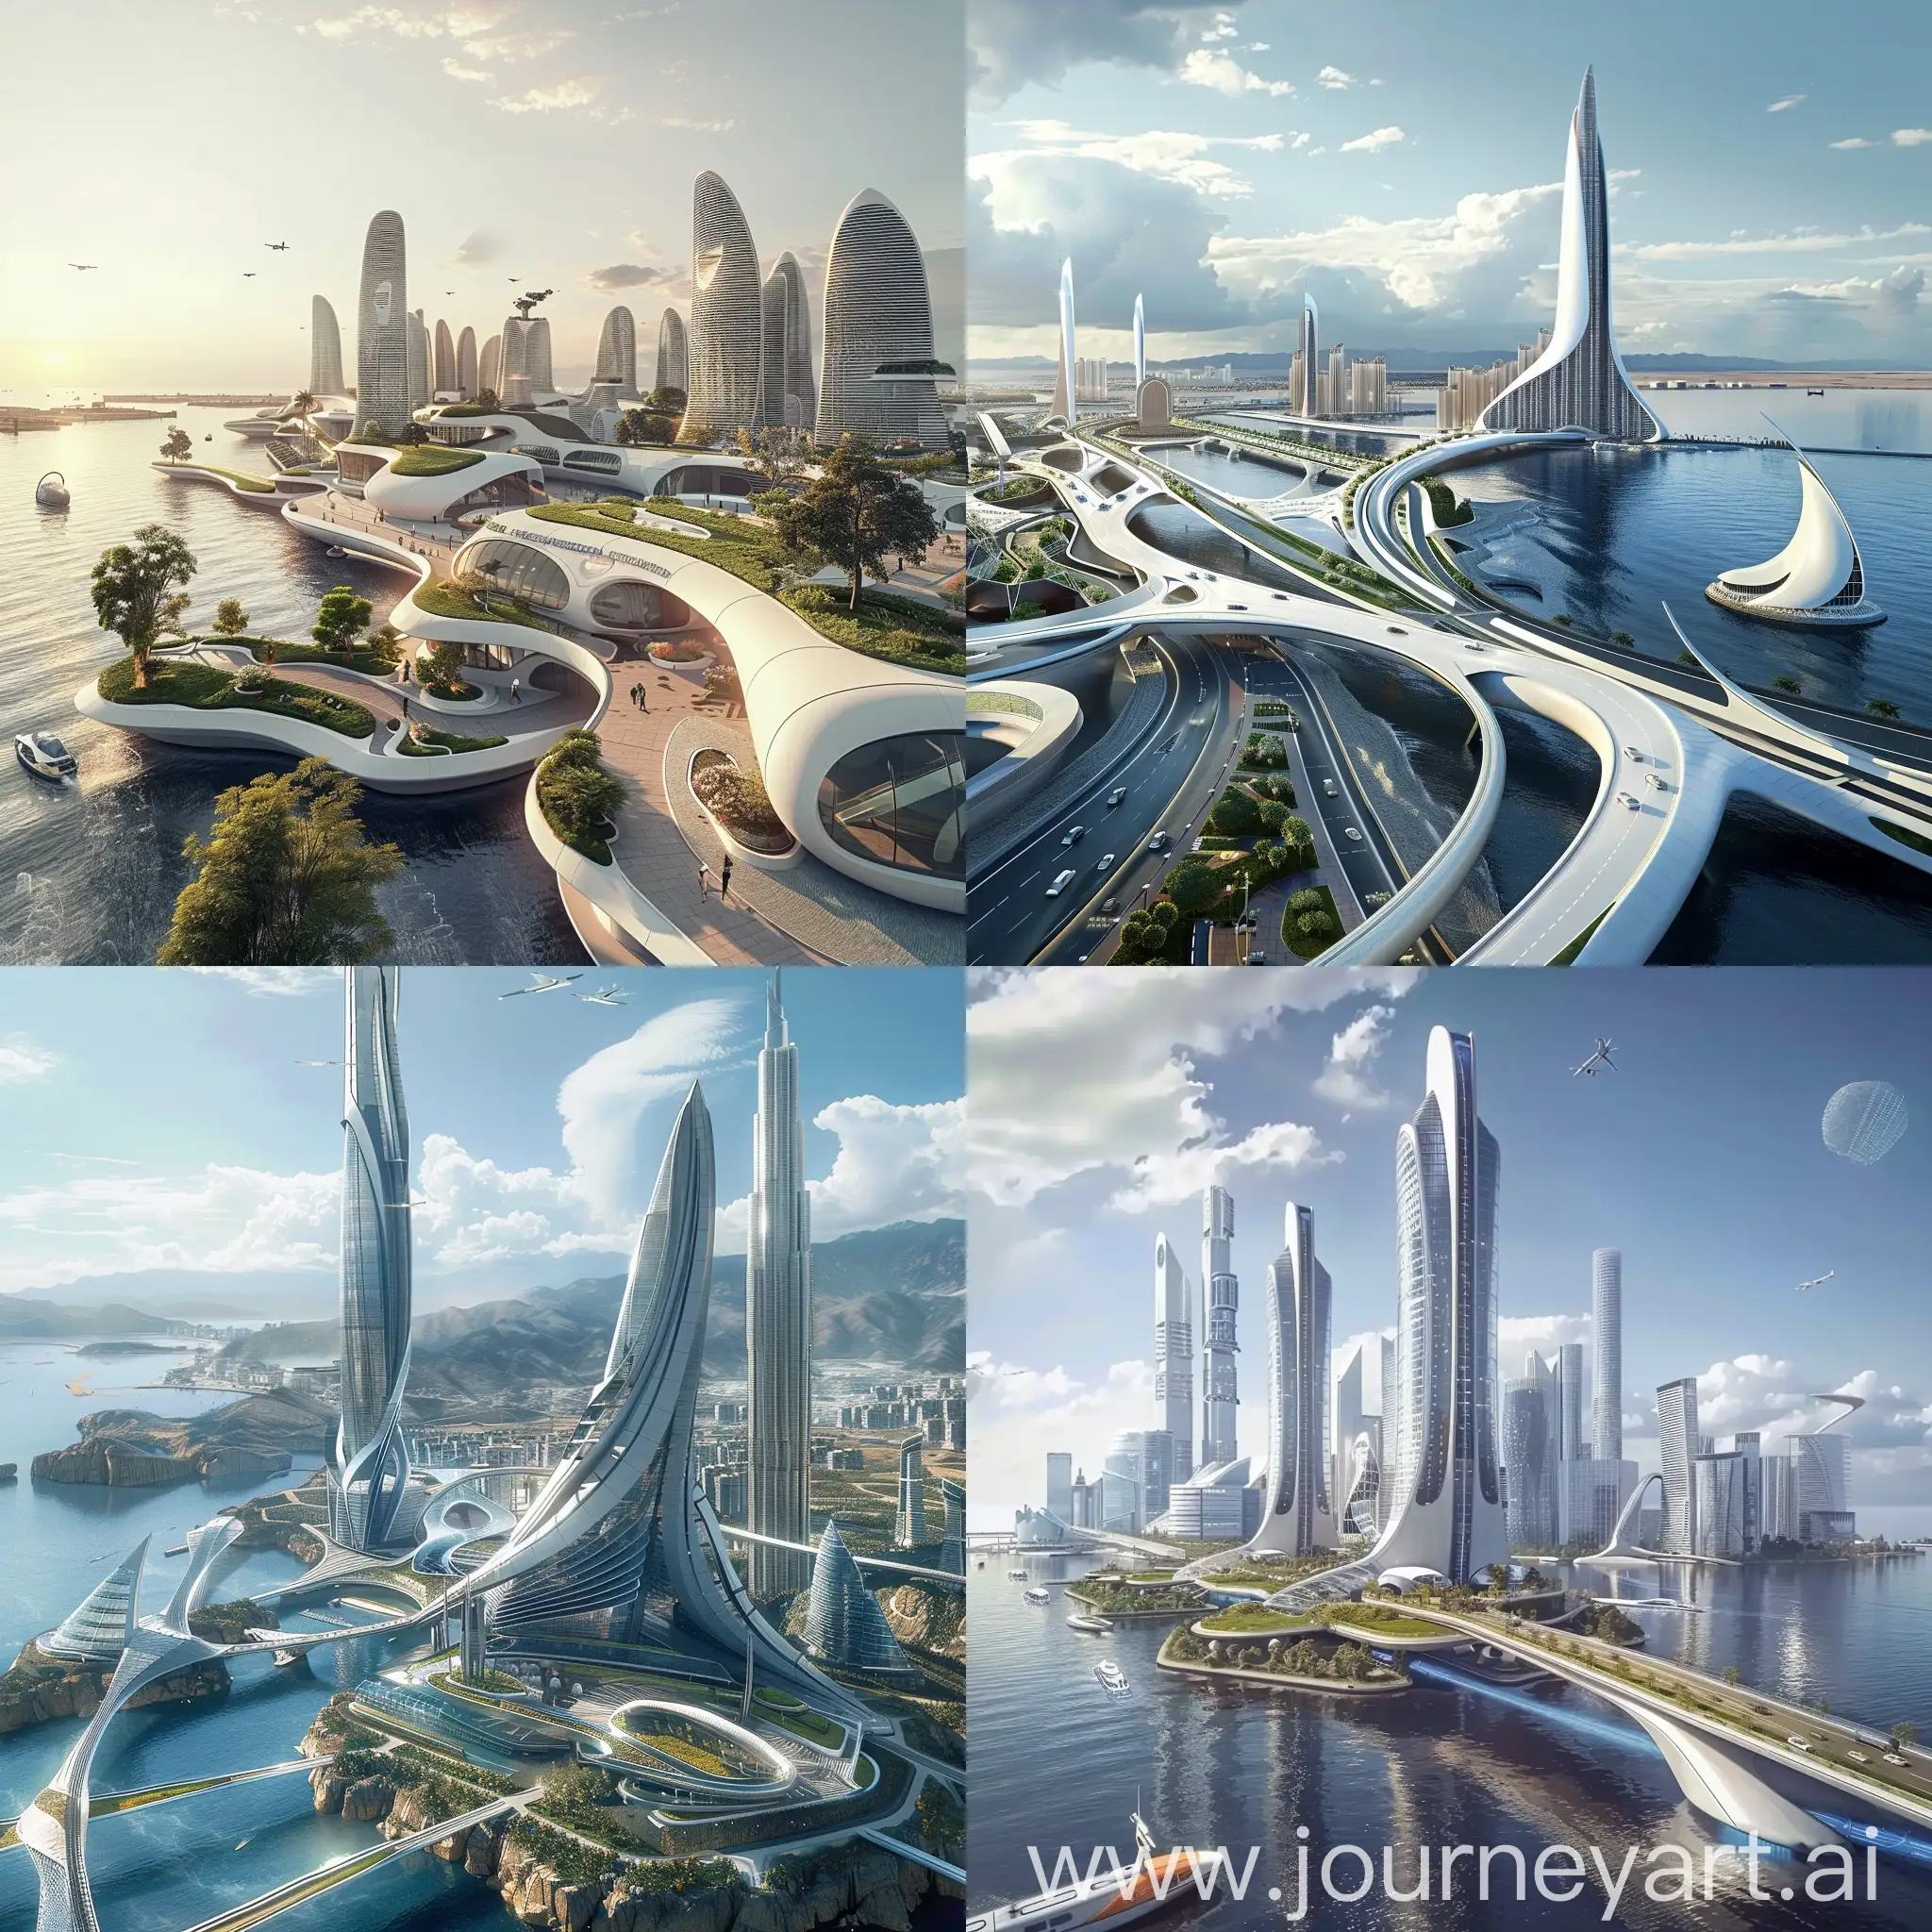 Futuristic-Vladivostok-BioIntegrated-Infrastructure-and-Hyperloop-Transportation